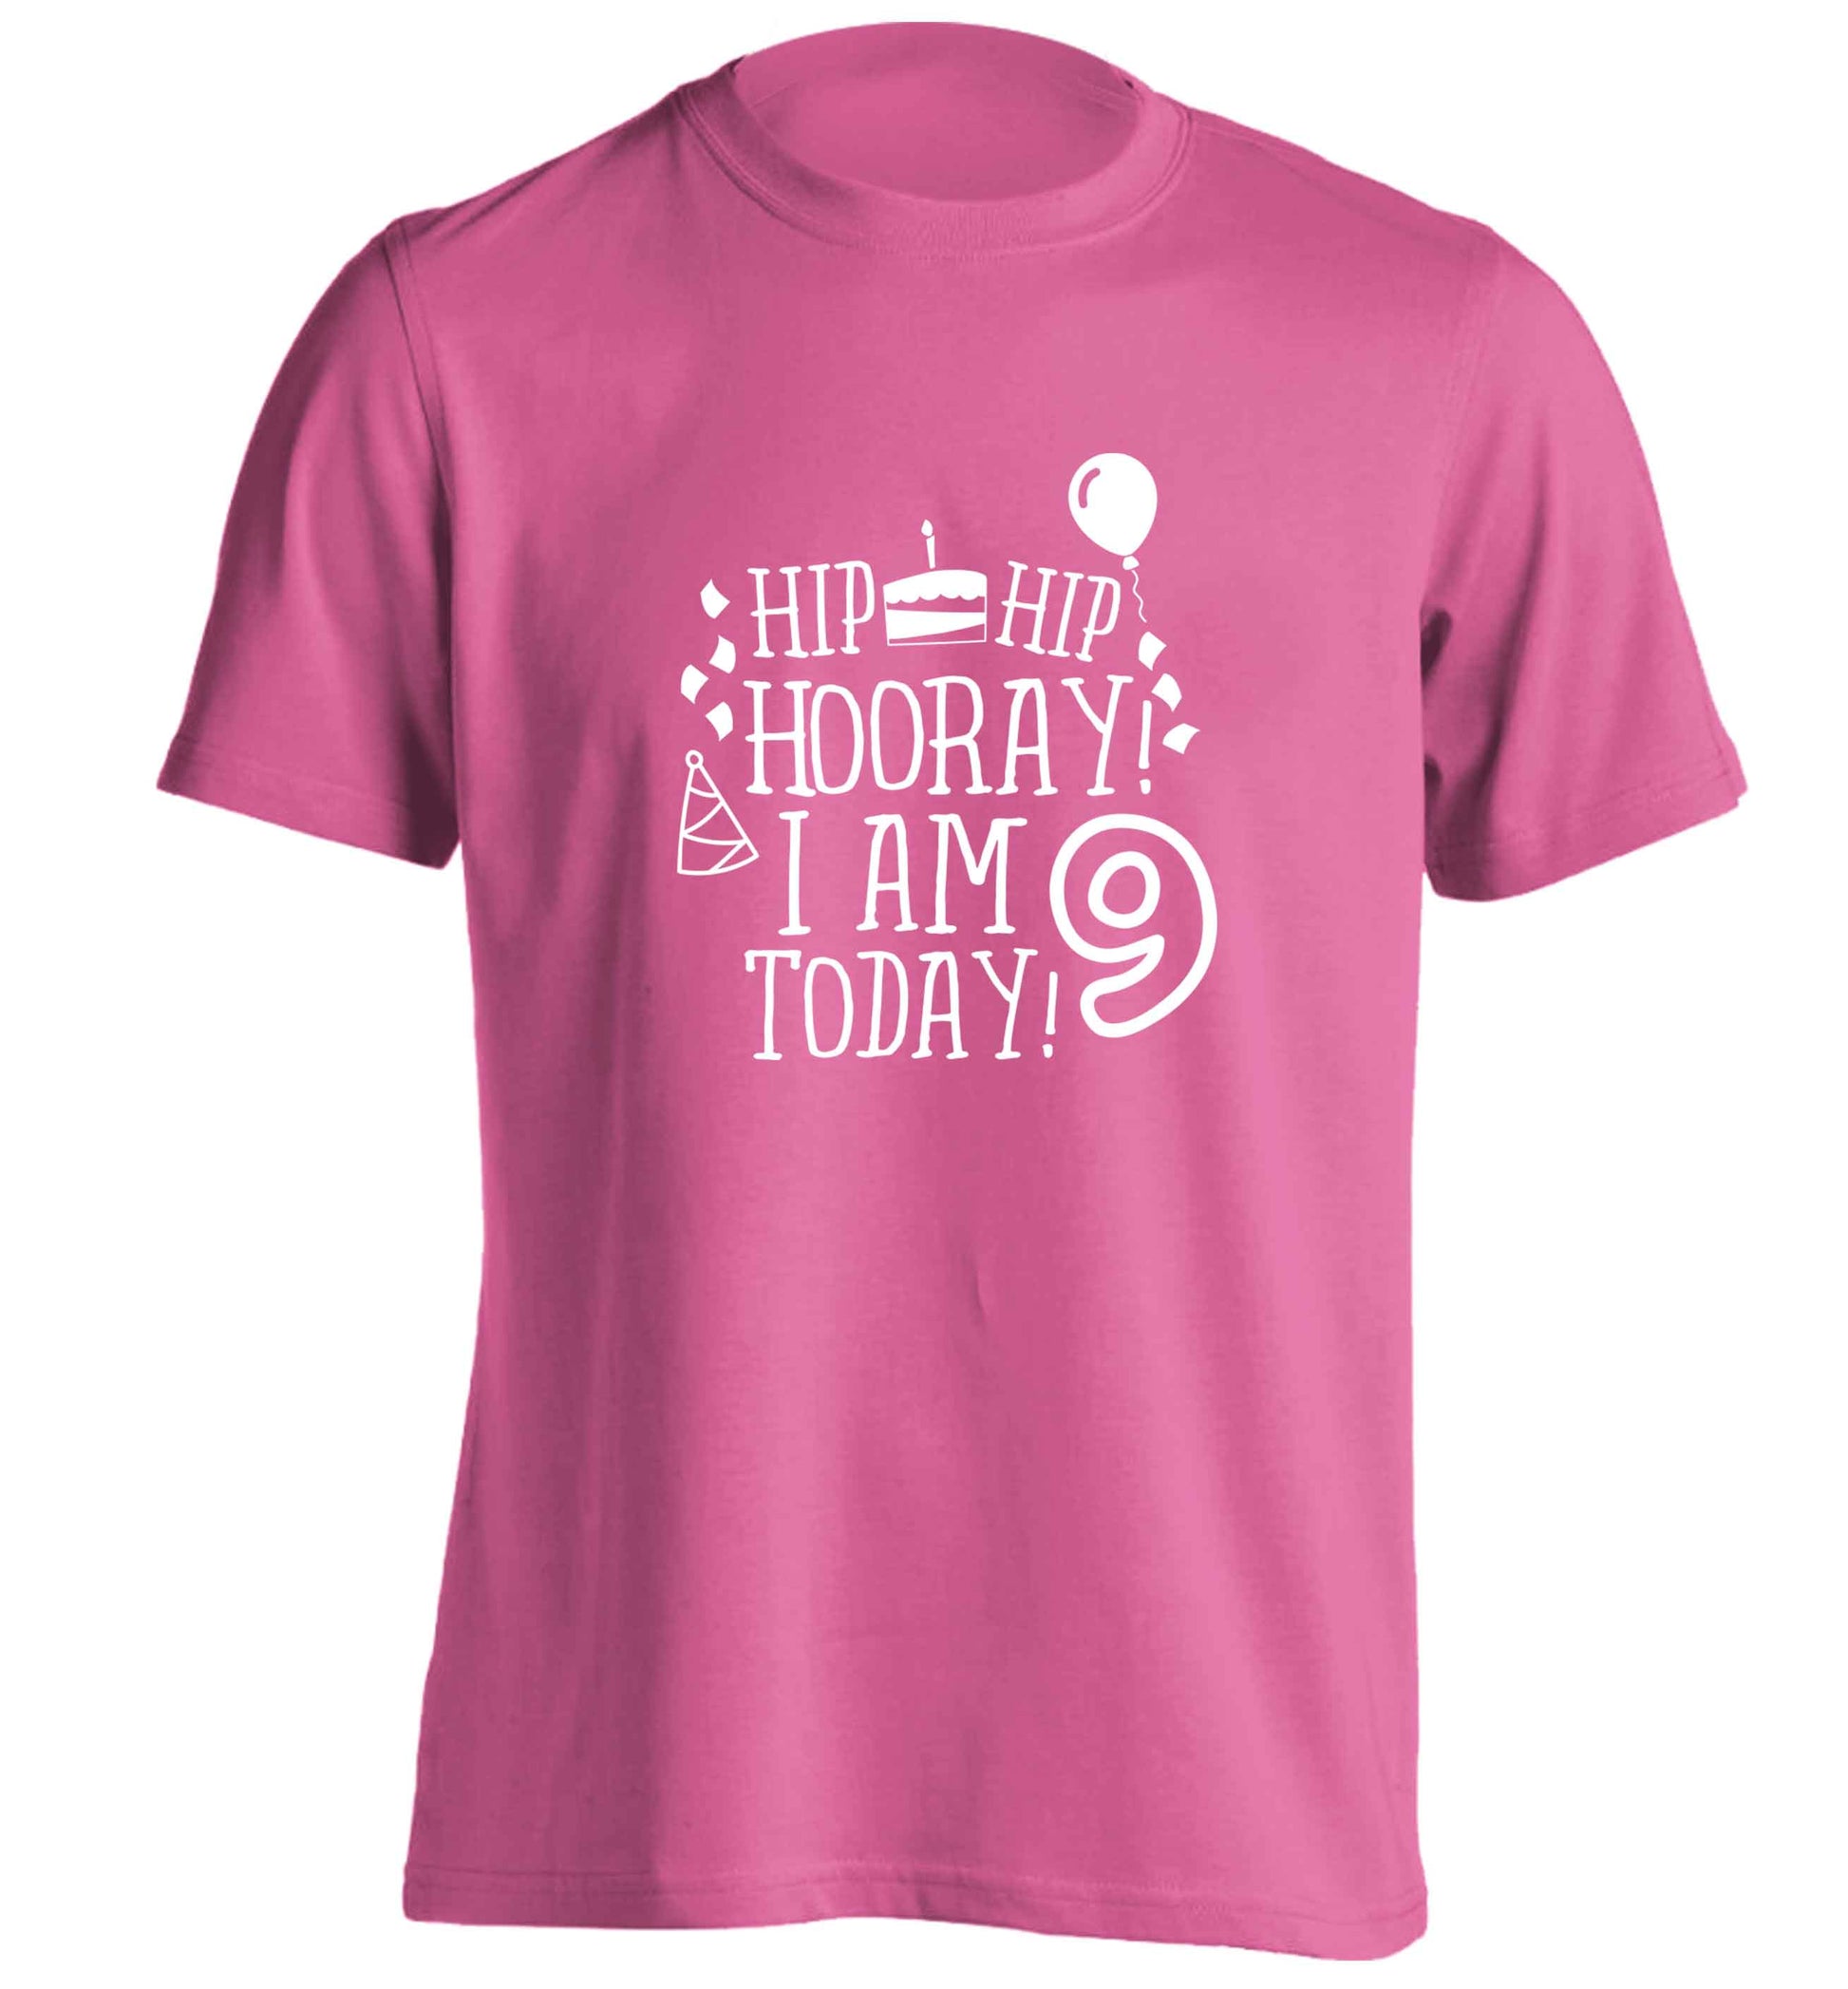 Hip hip hooray I am 9 today! adults unisex pink Tshirt 2XL